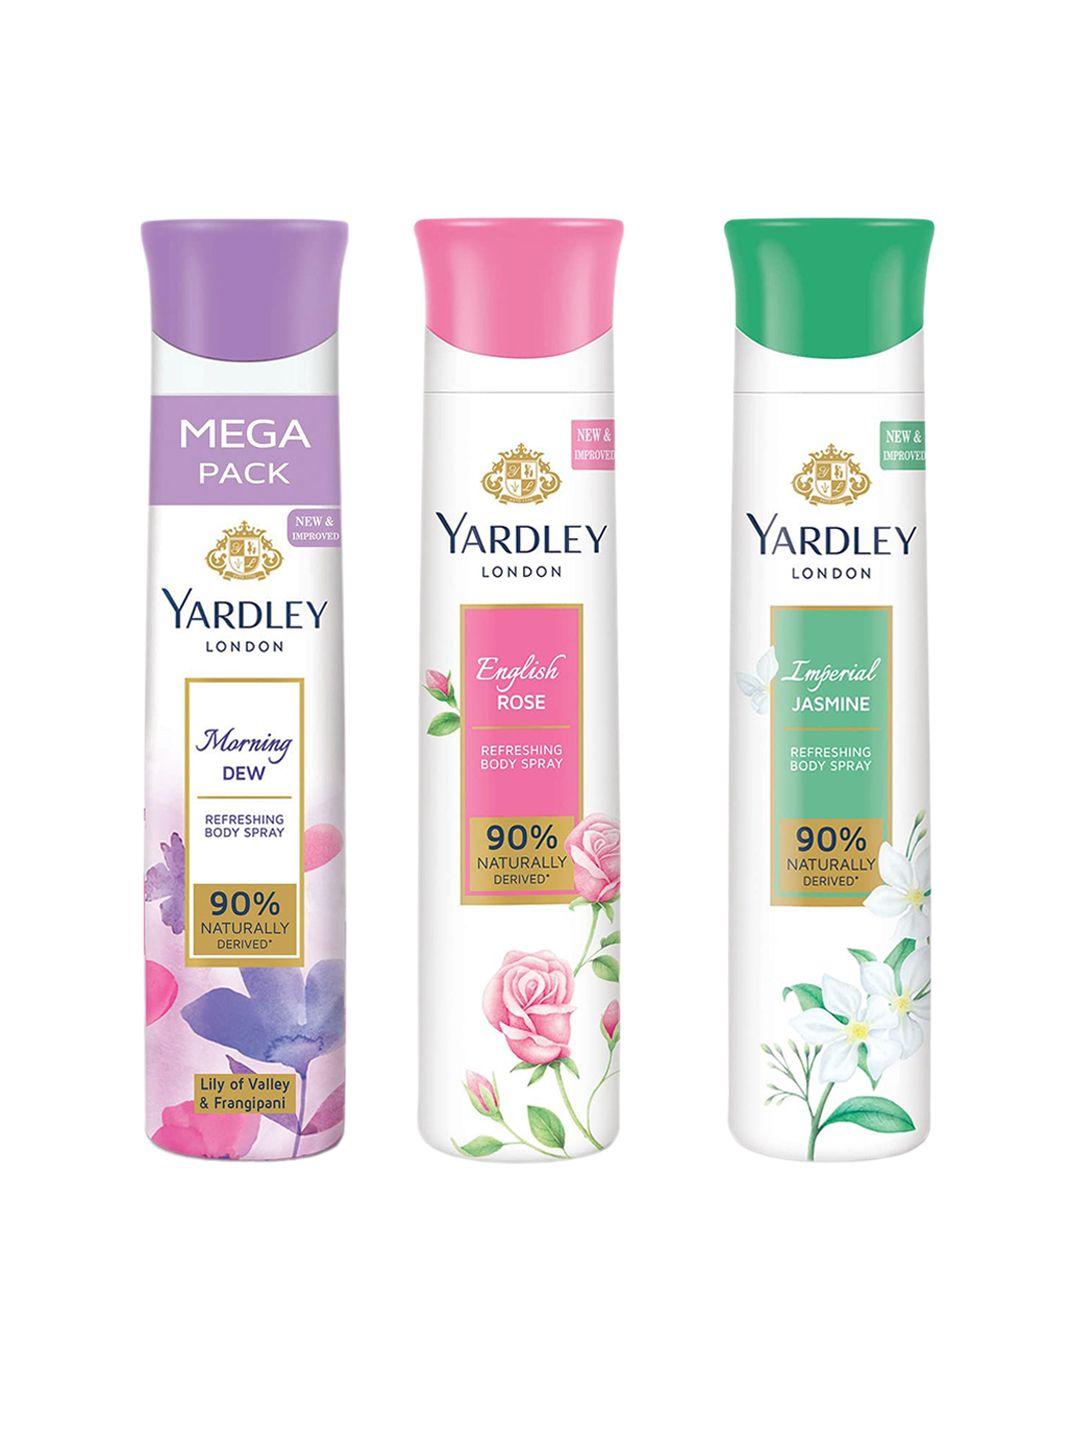 yardley london set of 3 perfumed deodorant body spray morning dew - imperial jasmine & english rose - 150 ml each